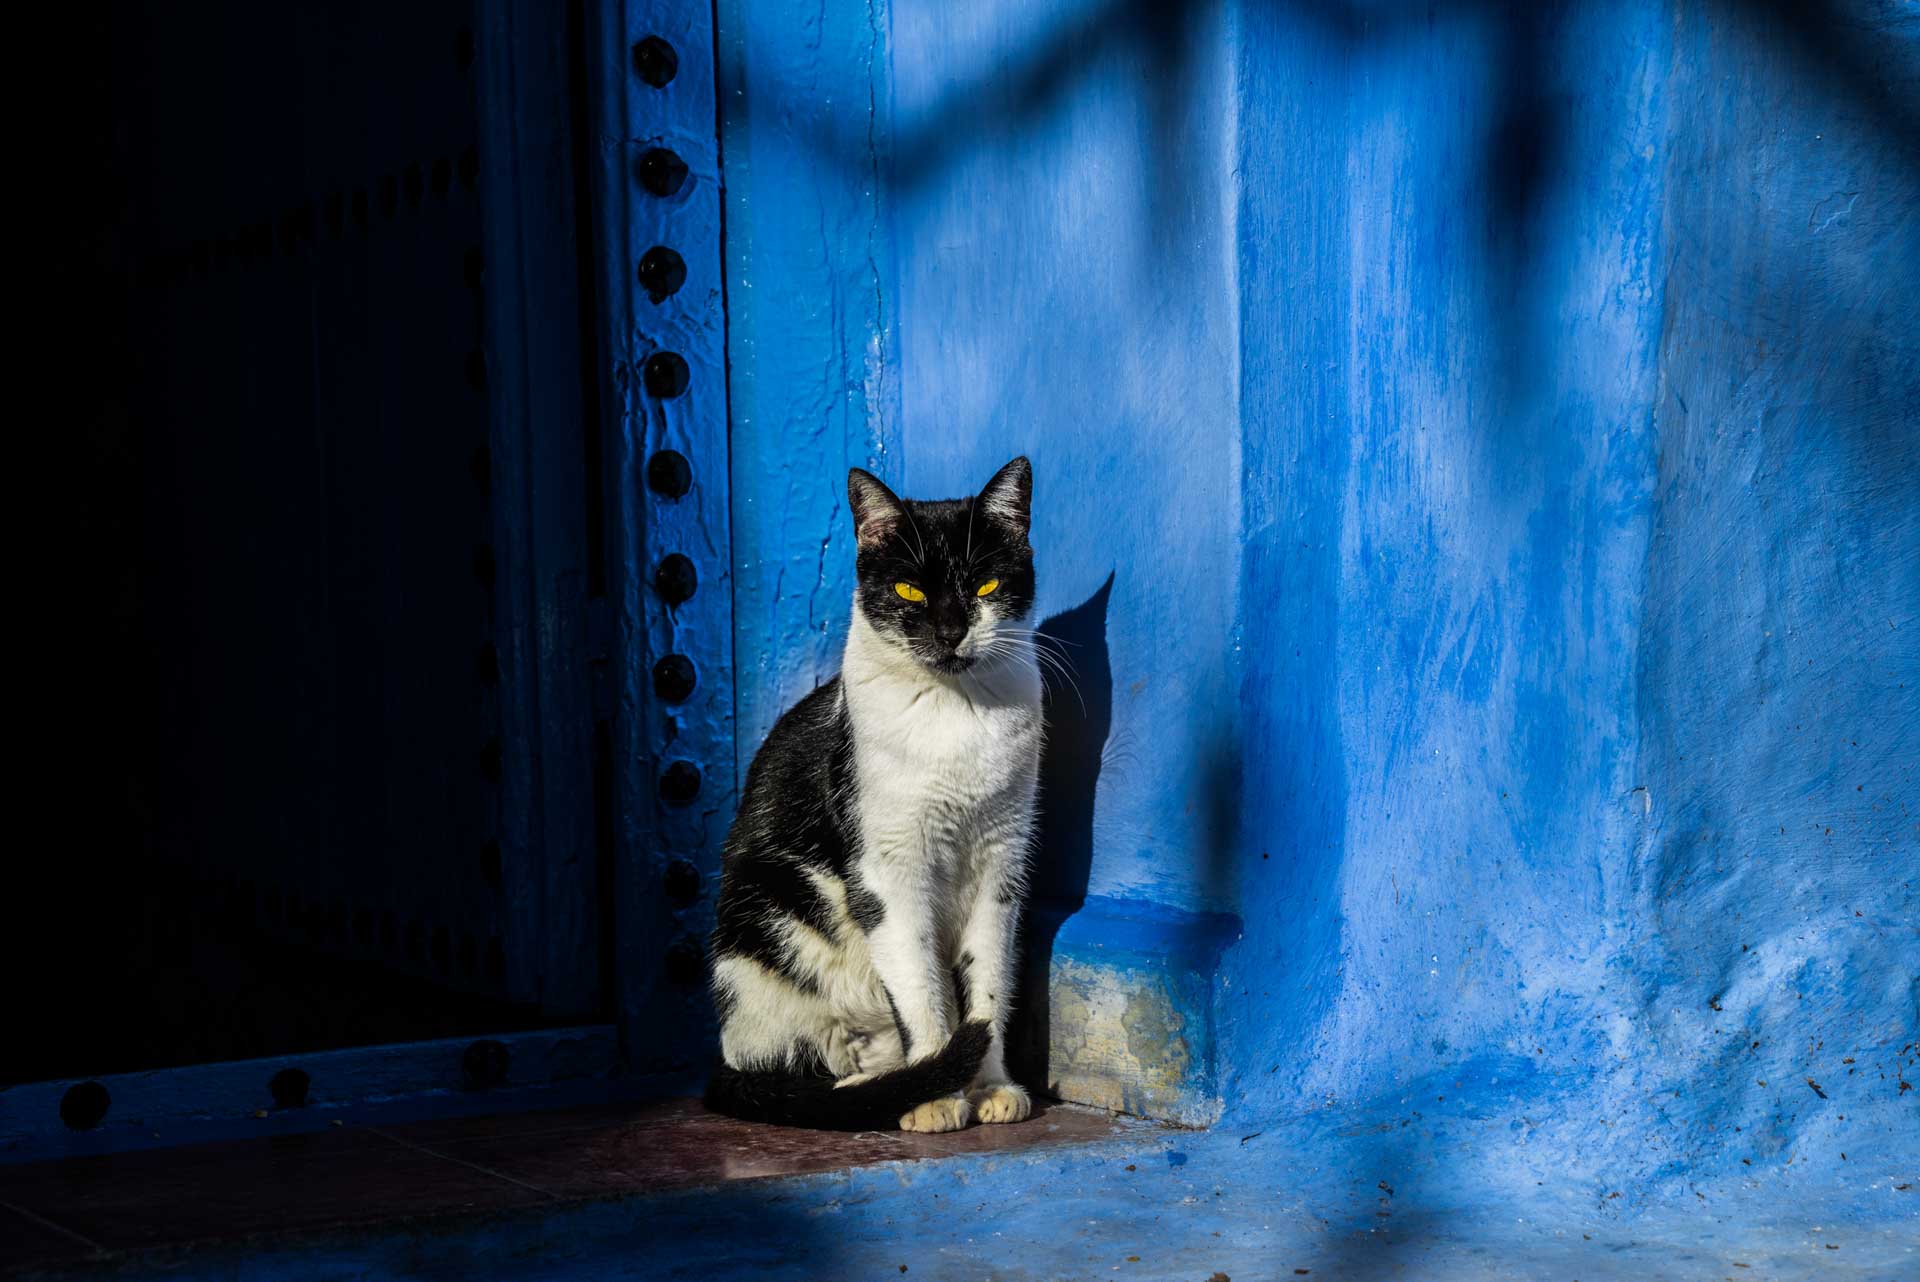 Morocco Chefchaouen blue cat, morocco, chefchaouen, , pescart, photo blog, travel blog, blog, photo travel blog, enrico pescantini, pescantini